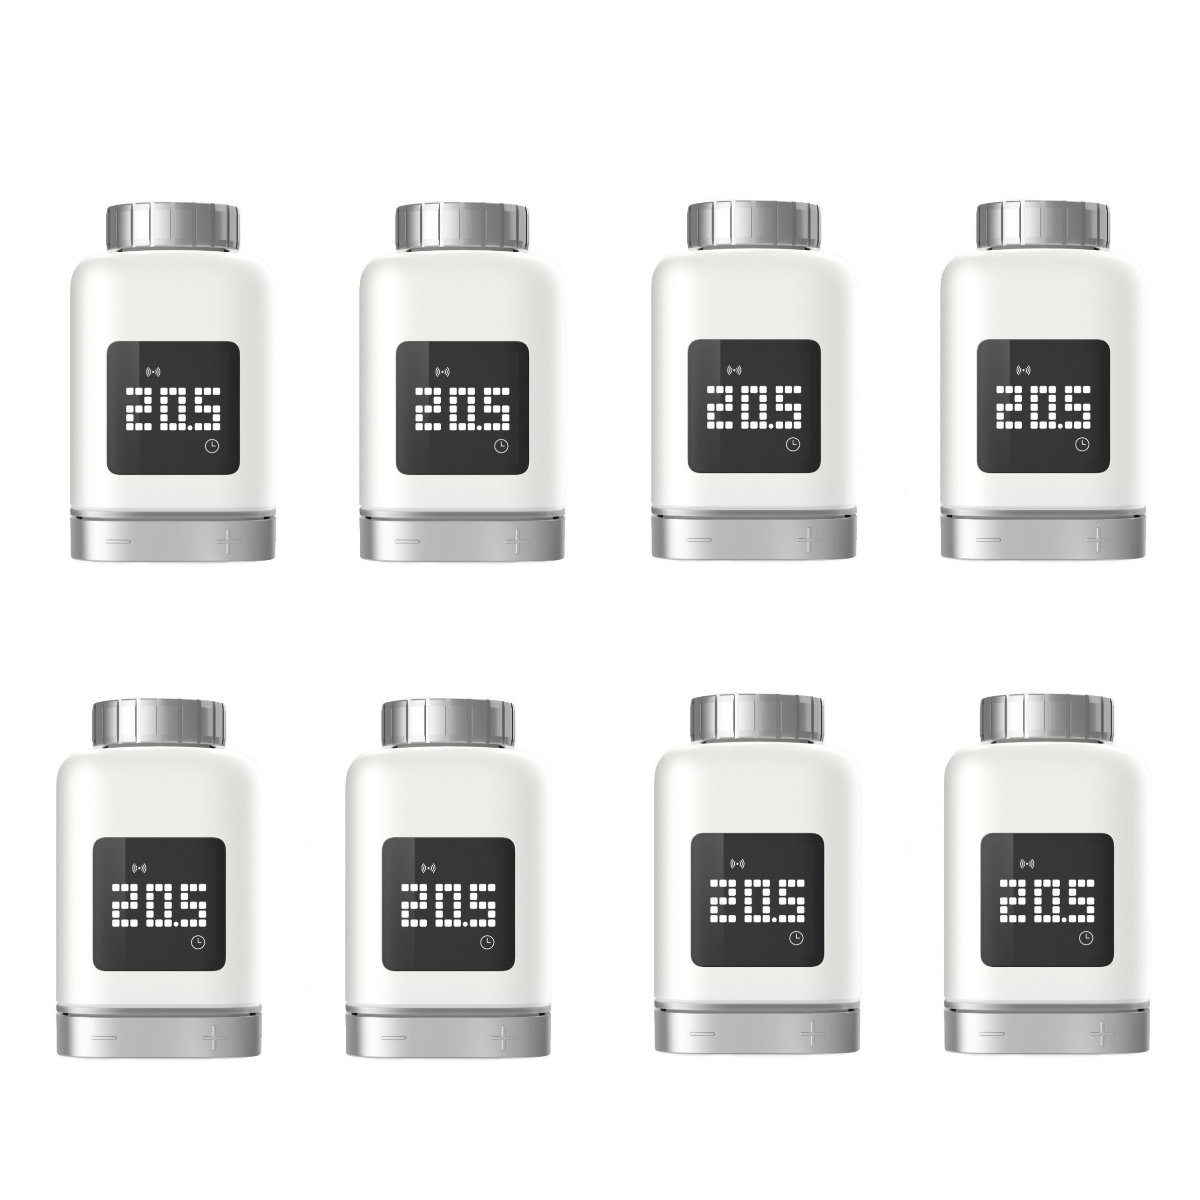 Bosch Smart Home Slimme Radiatorknop II 8-pack